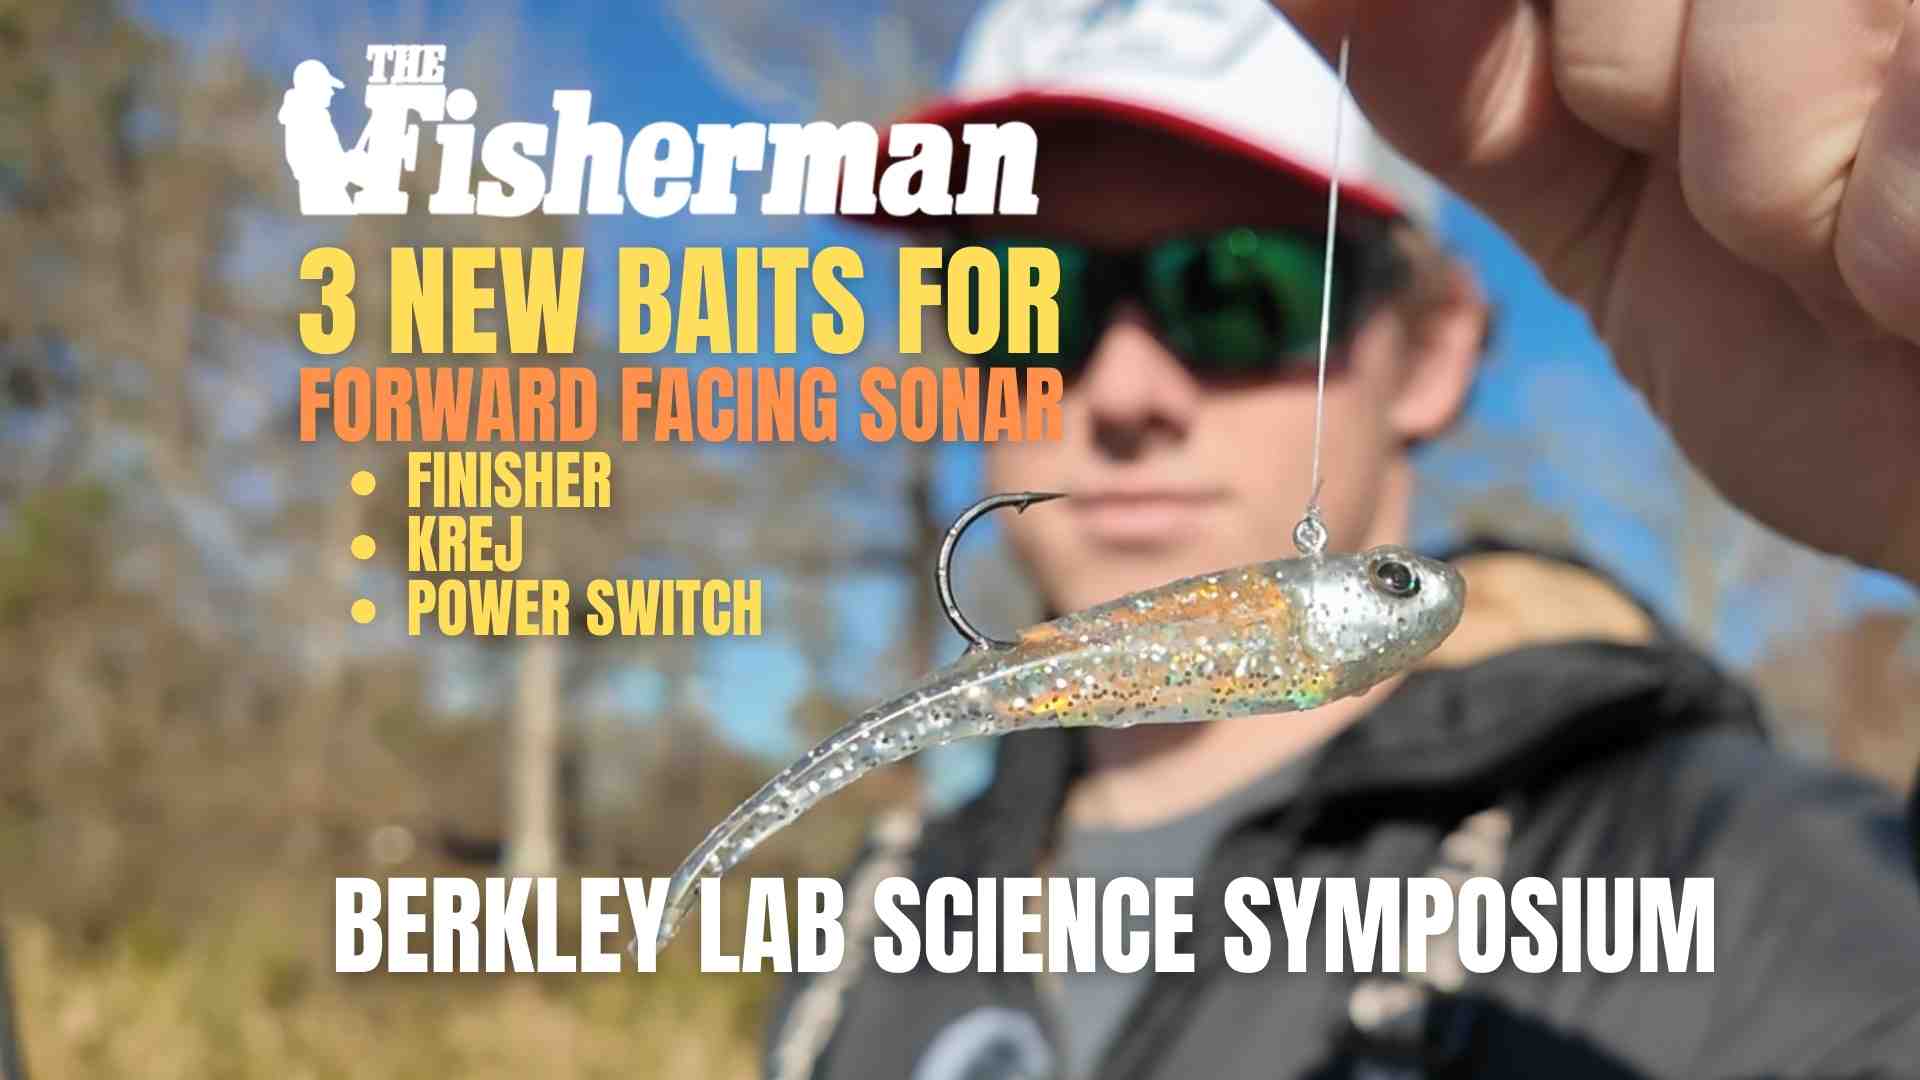 Berkley Lab Science Symposium - The Fisherman